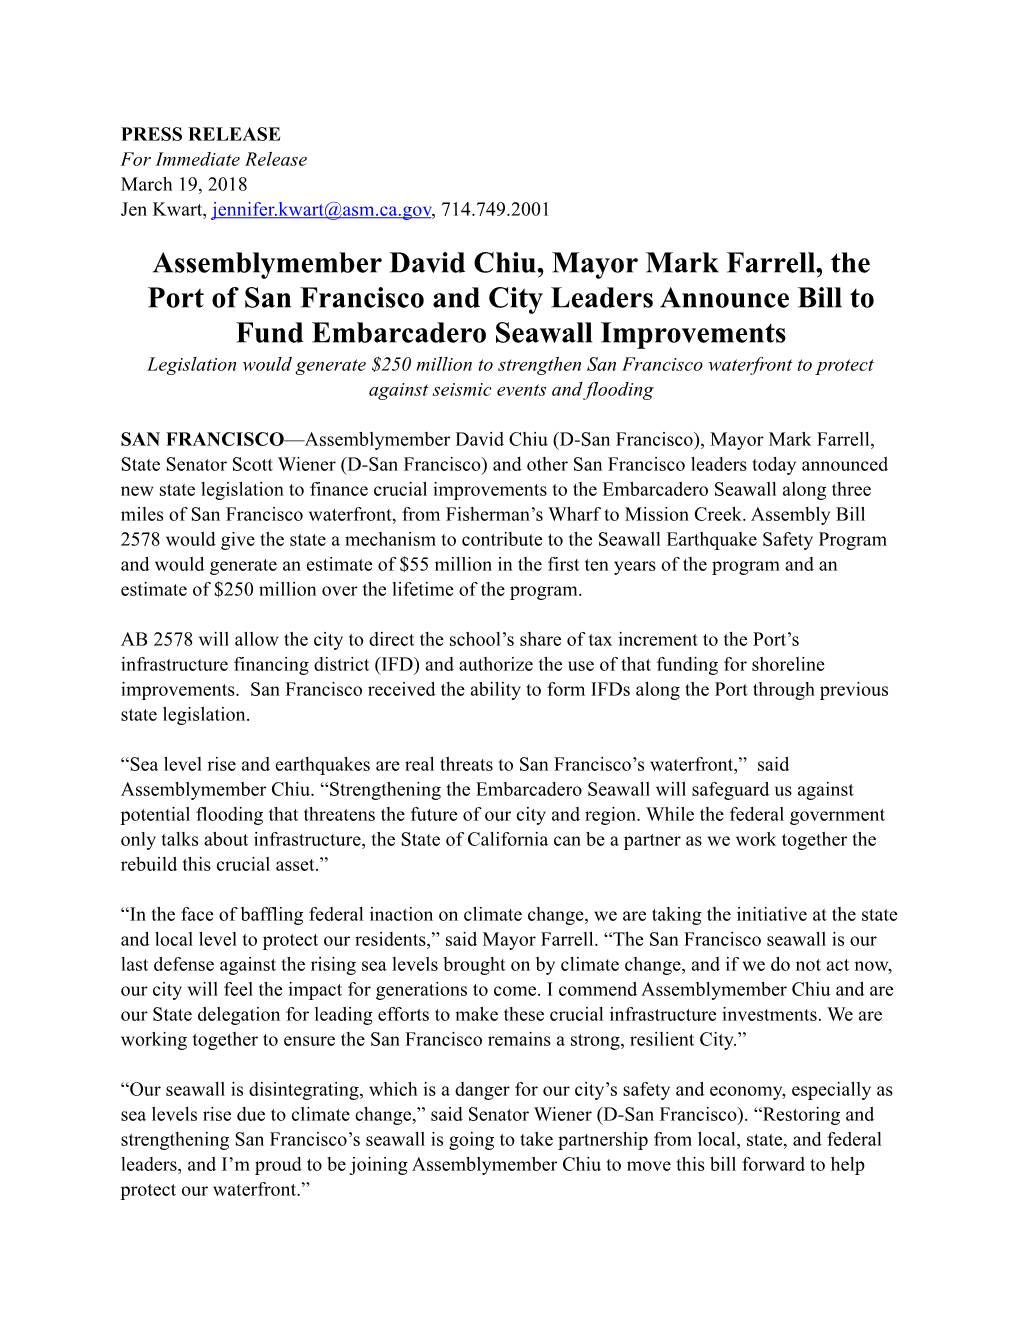 Media Release-Assemblymember David Chiu, Mayor Mark Farrell, The